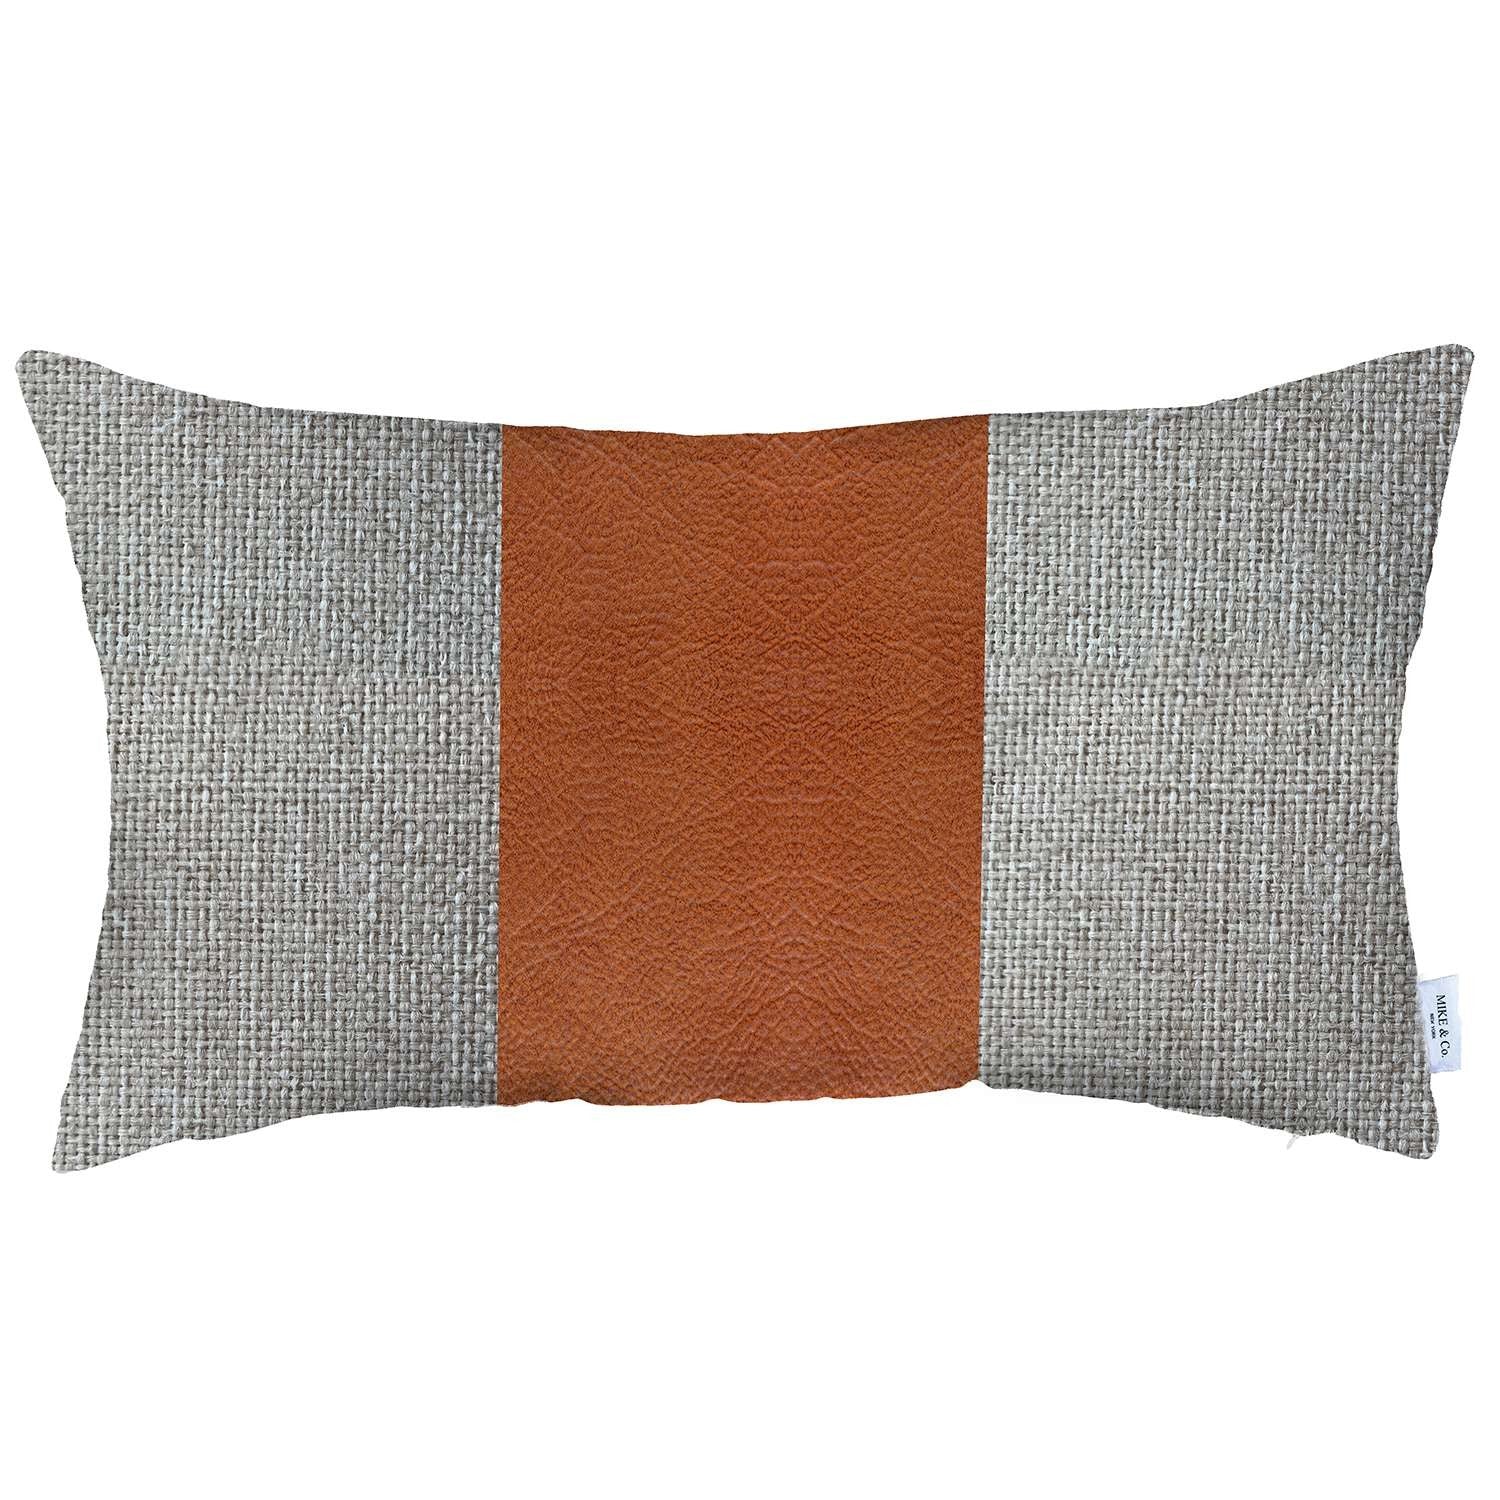 12" X 20" Grey And Brown Geometric Zippered Handmade Polyester Lumbar Pillow Cover